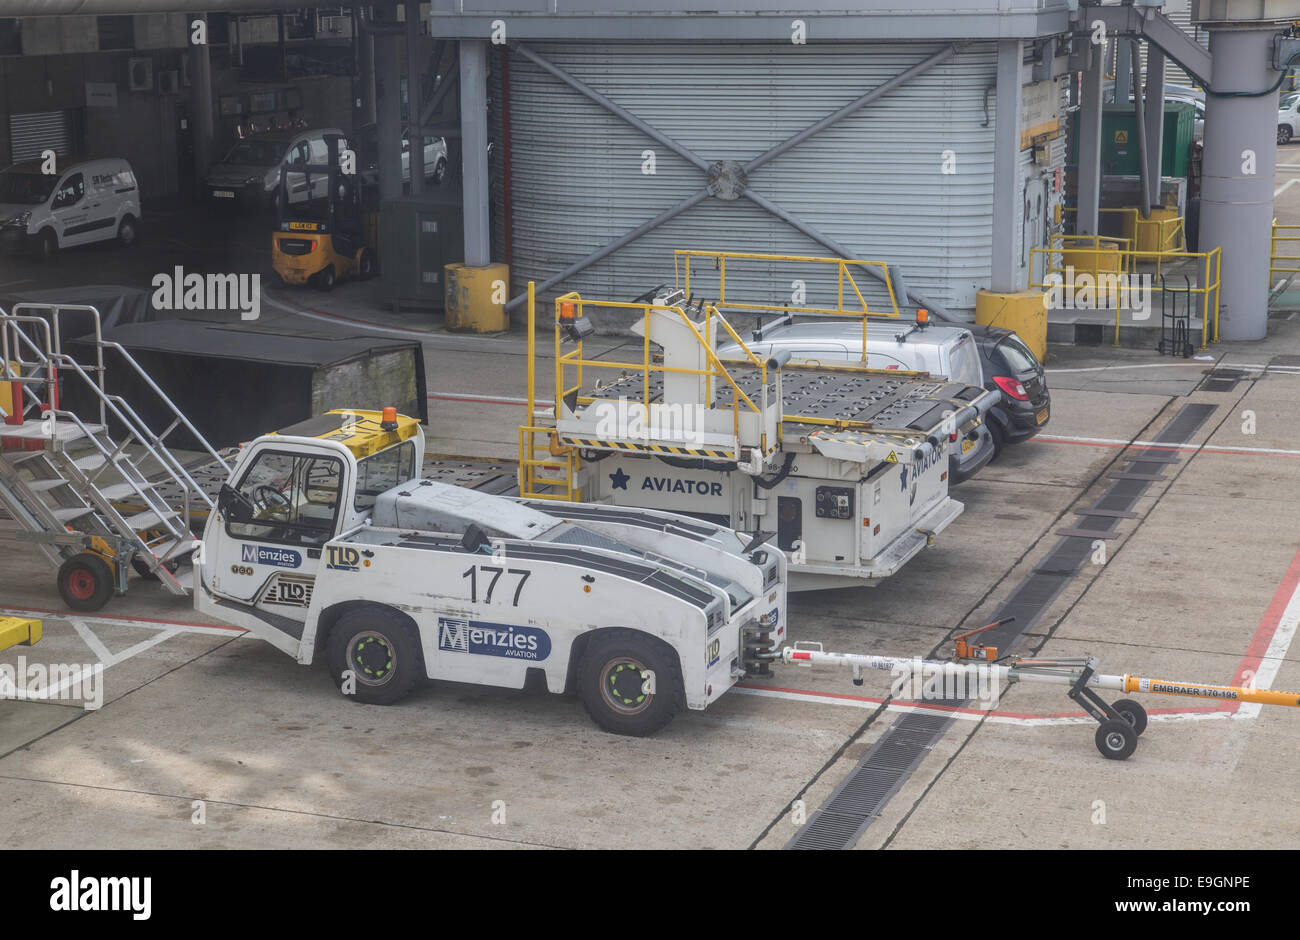 Aircraft servicing vehicles at the airport Stock Photo